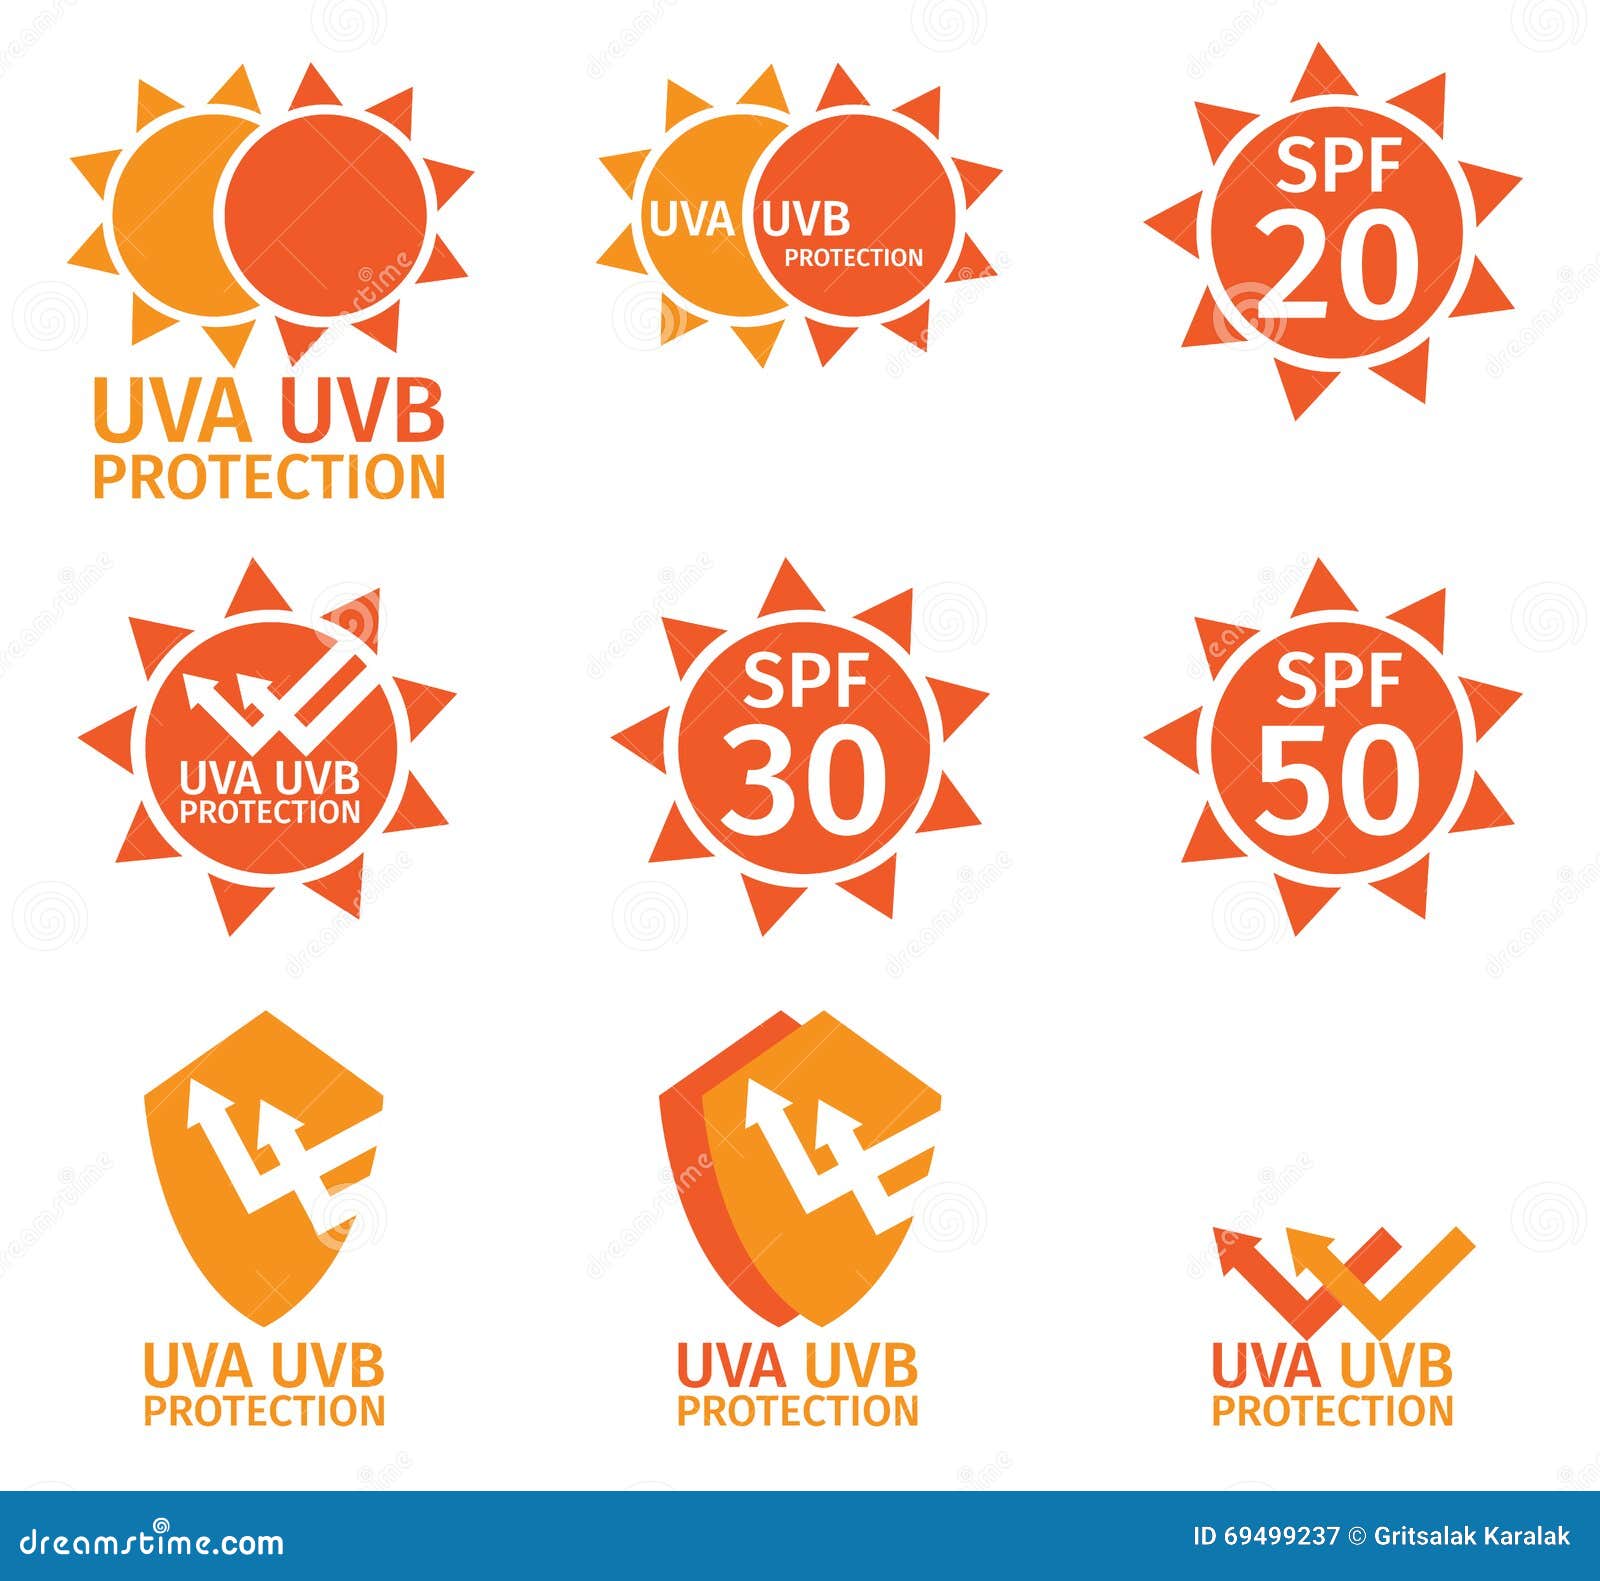 uv logo , uva uvb and spf with orange color